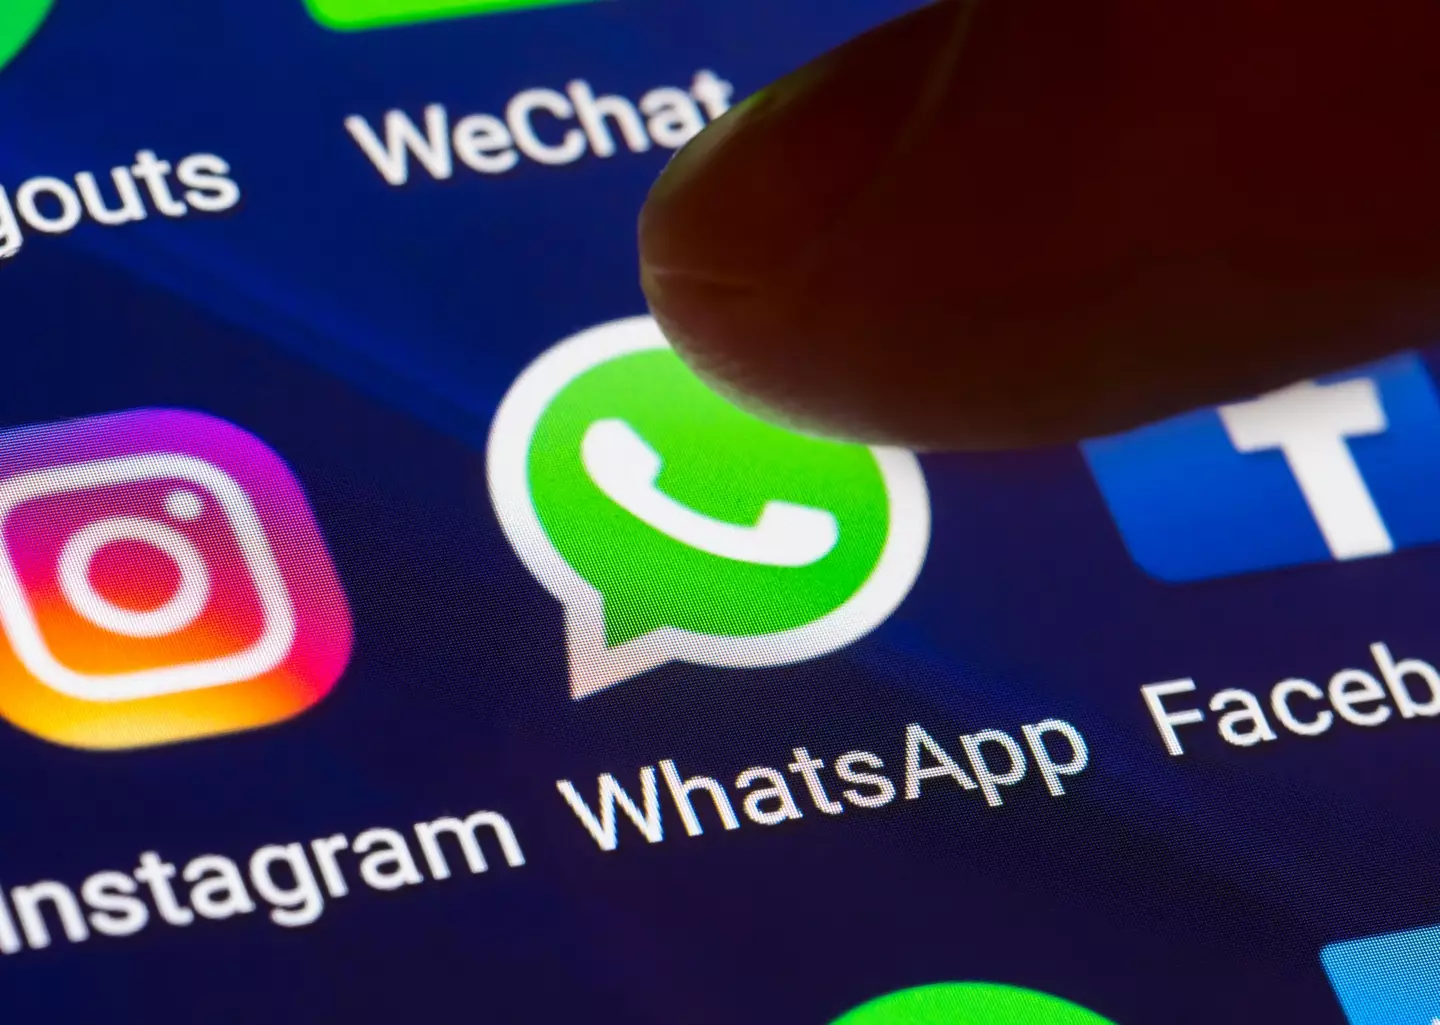 WhatsApp will stop working on older phones.